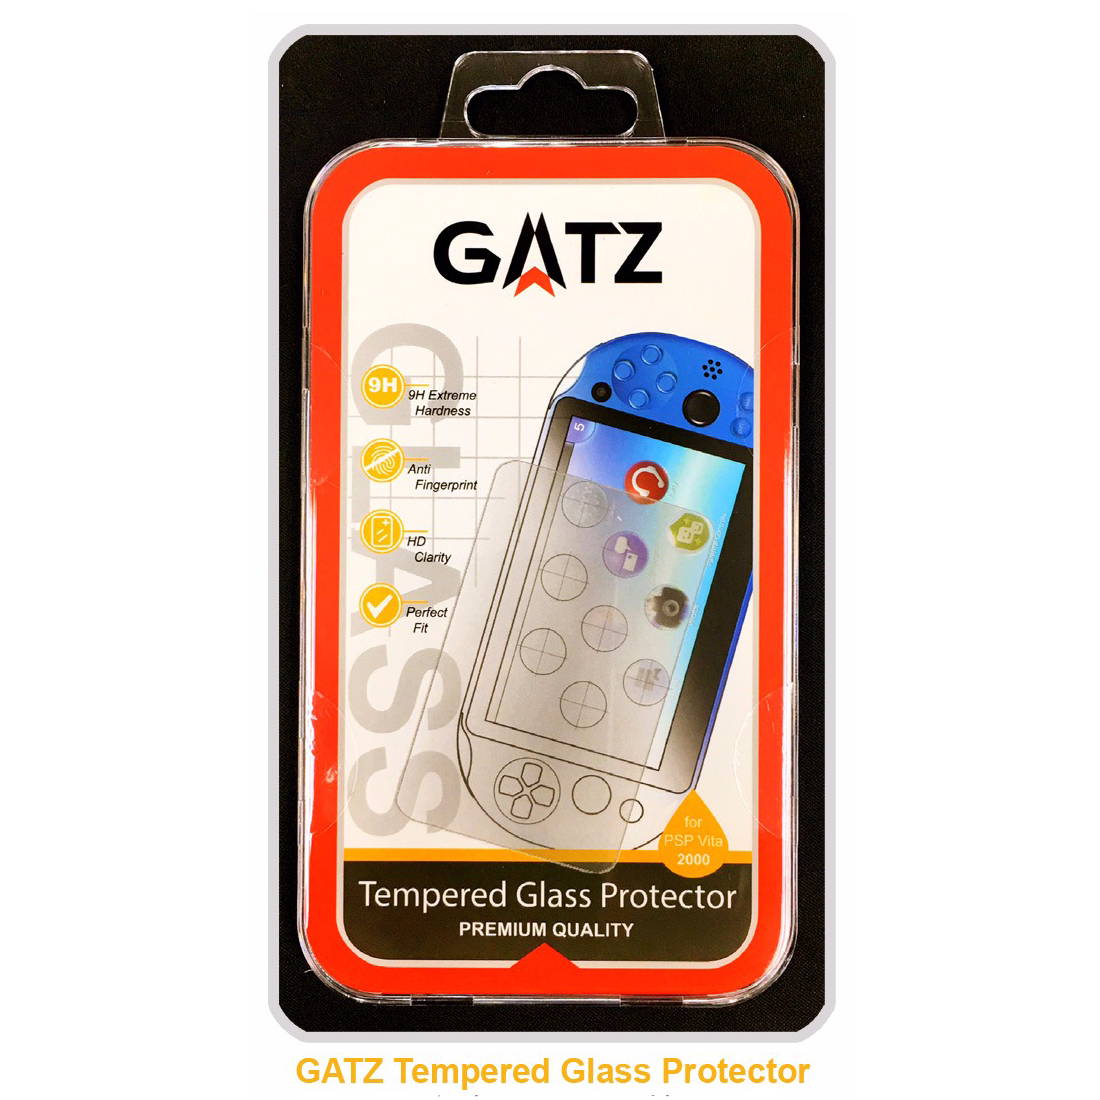 Gatz Premium Quality Tempered Glass Protector for PS Vita 2006 Series